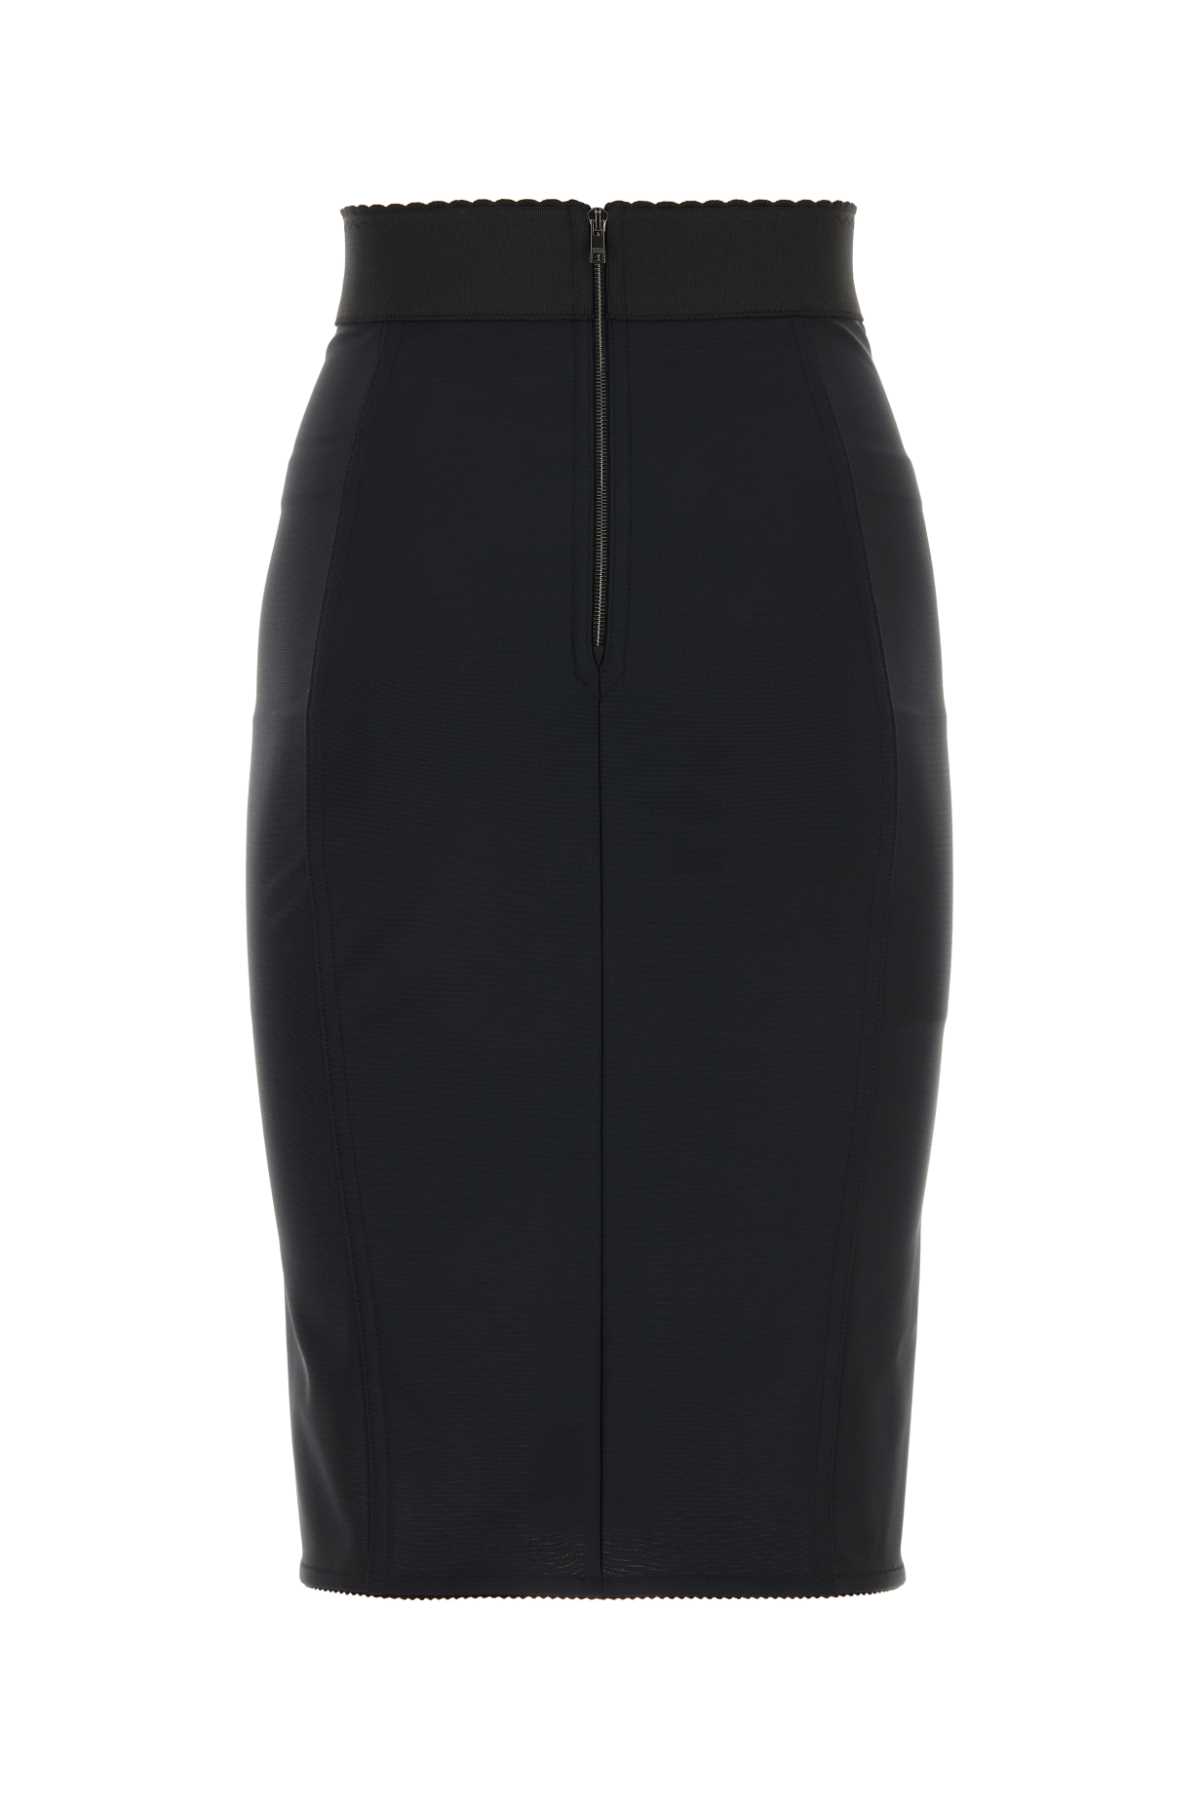 Dolce & Gabbana Black Stretch Nylon Blend Skirt In N0000